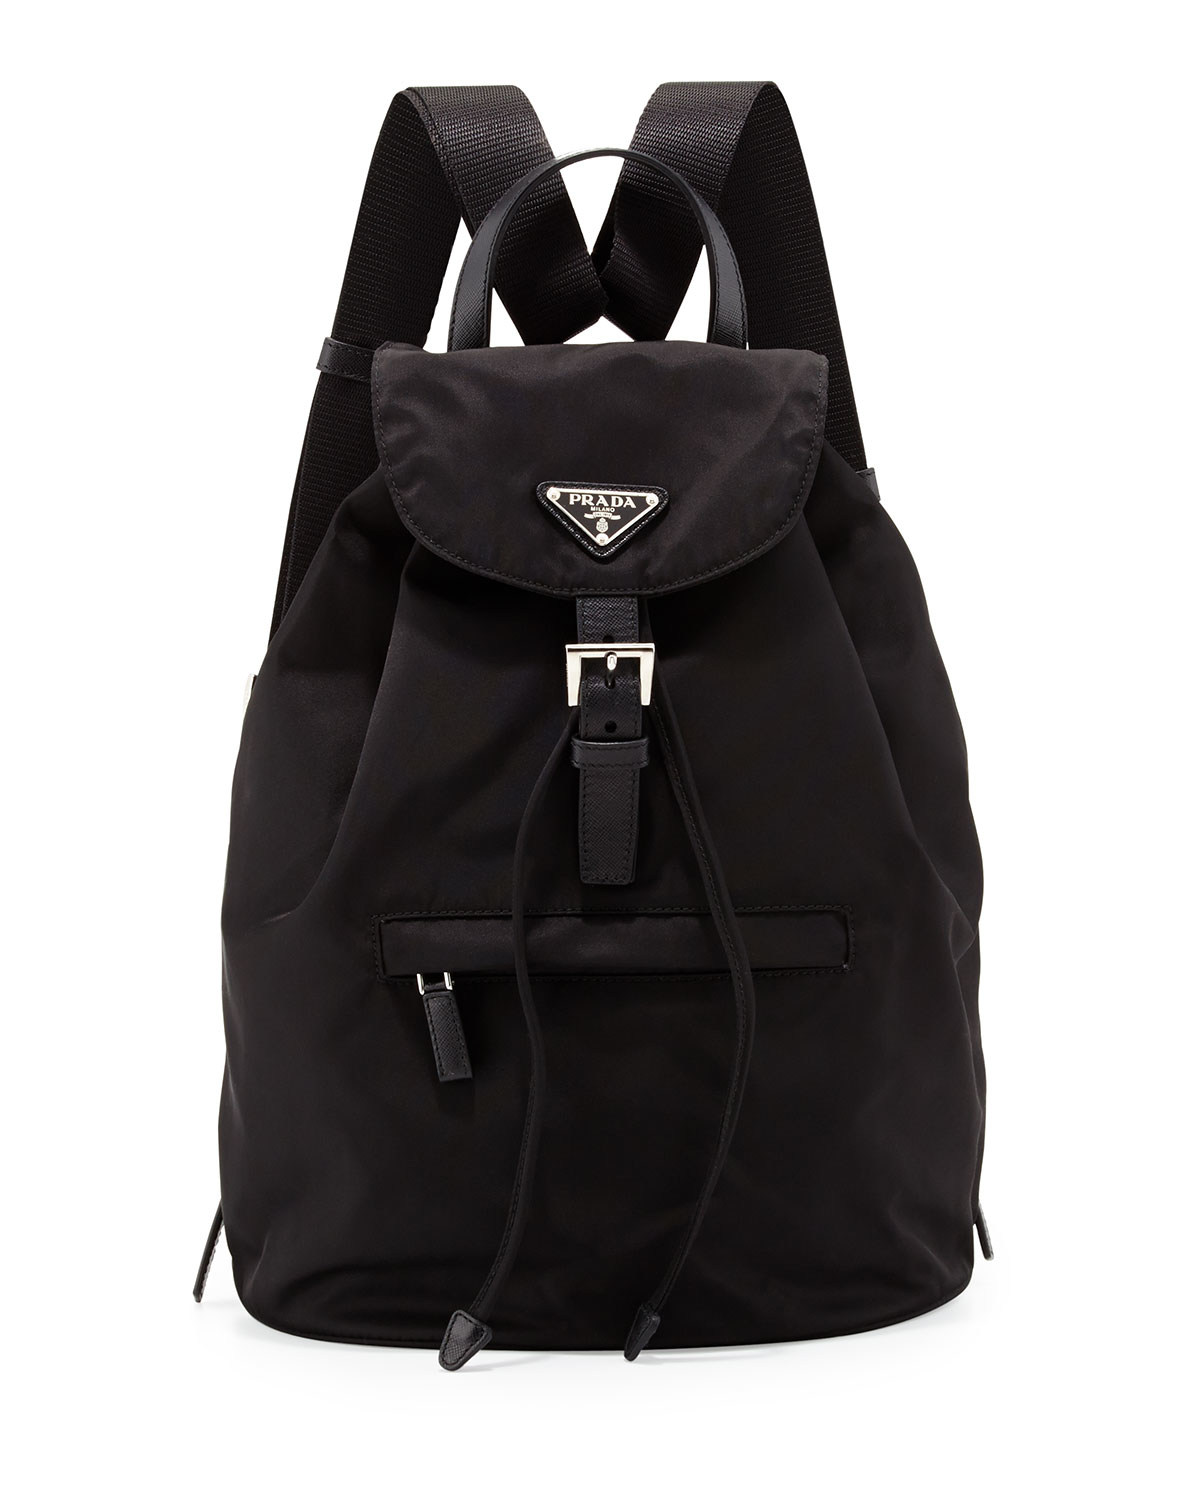 Prada Synthetic Vela Medium Backpack in Black - Lyst